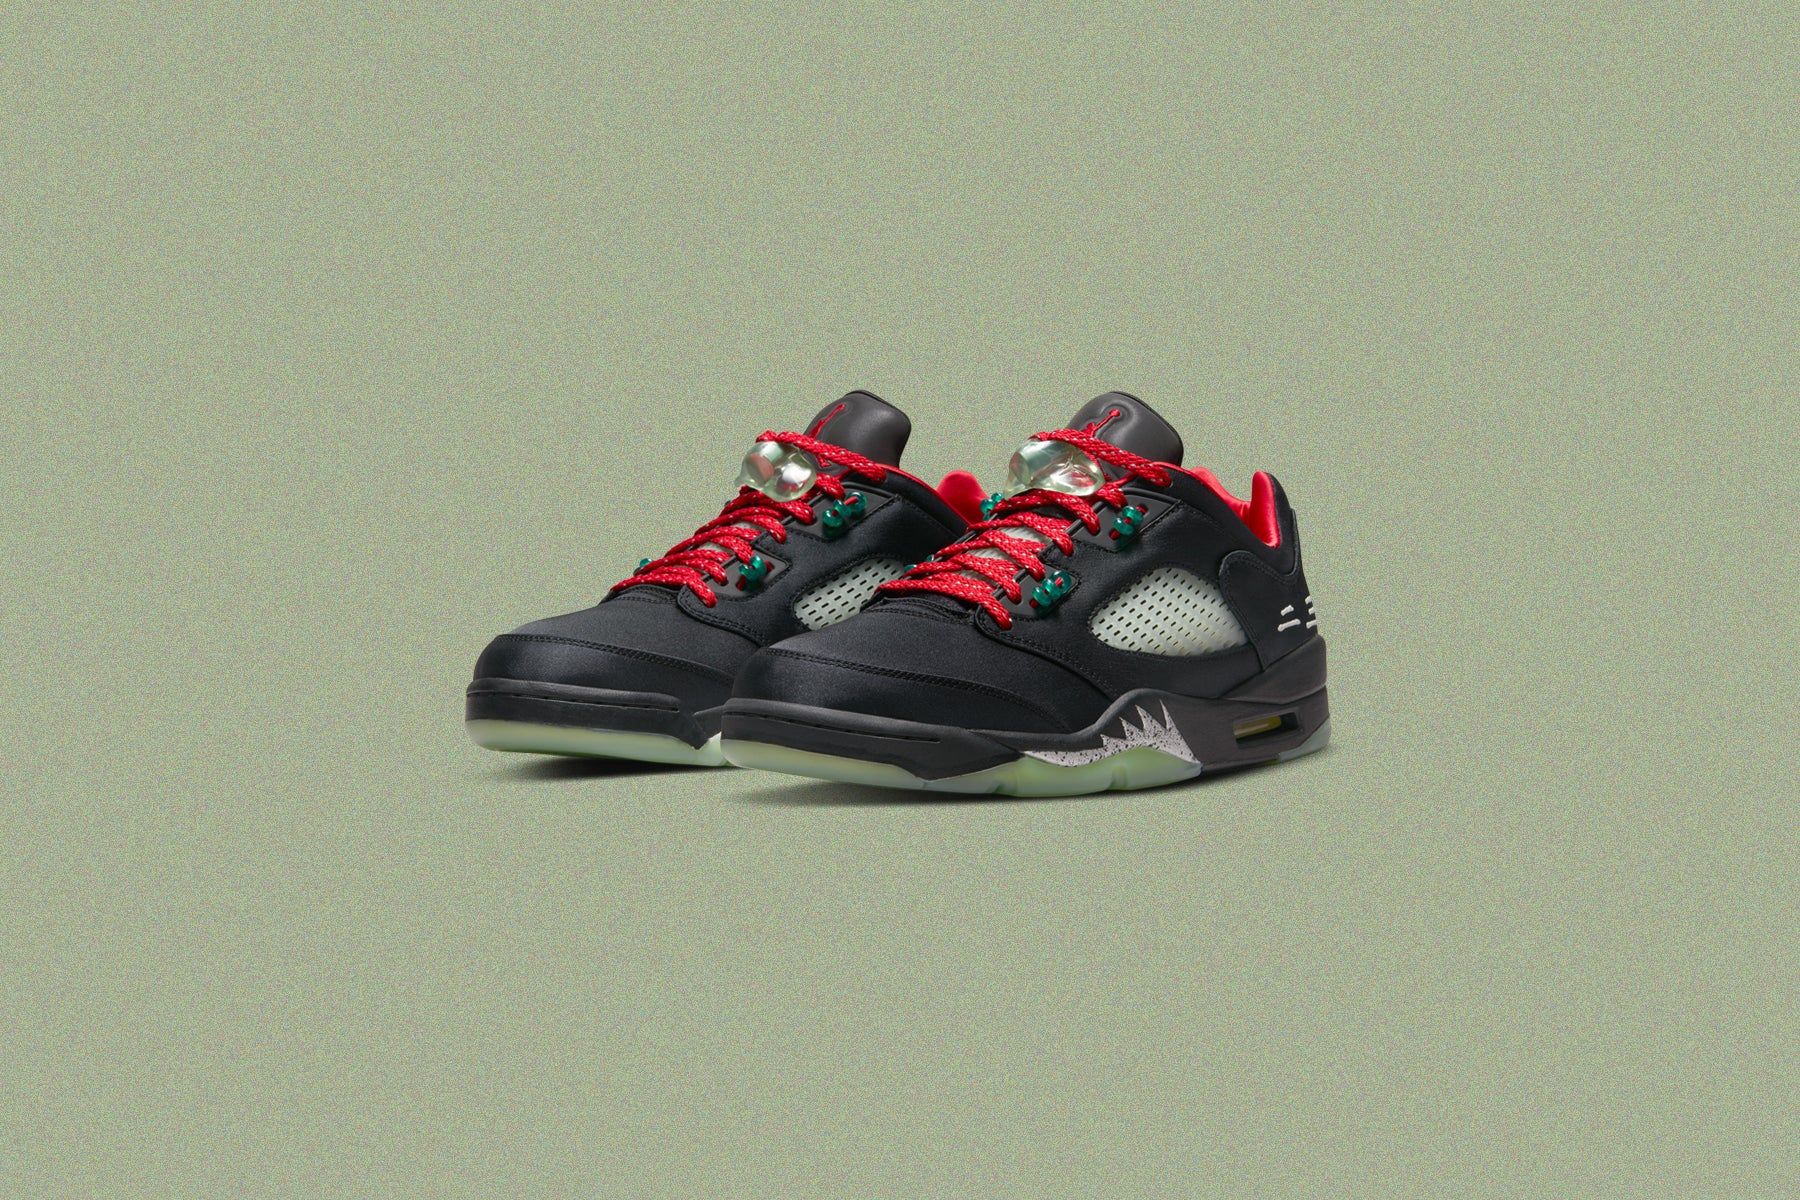 Air Jordan 5 Retro Low SP x CLOT - Black/Classic Jade/Fire Red – Feature